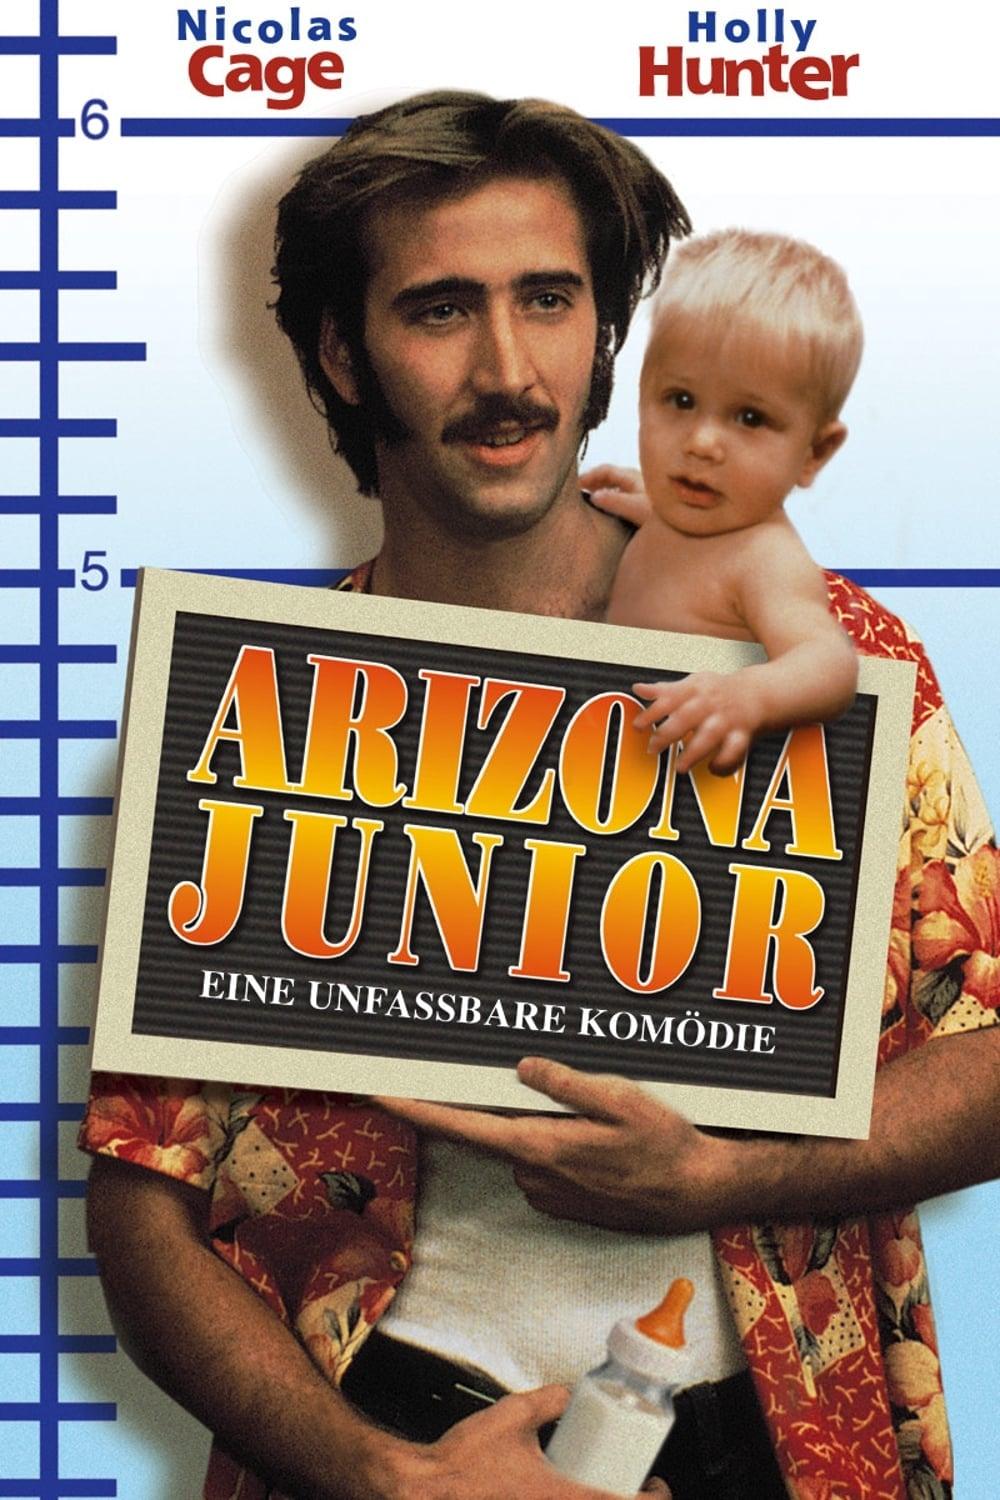 Arizona Junior poster